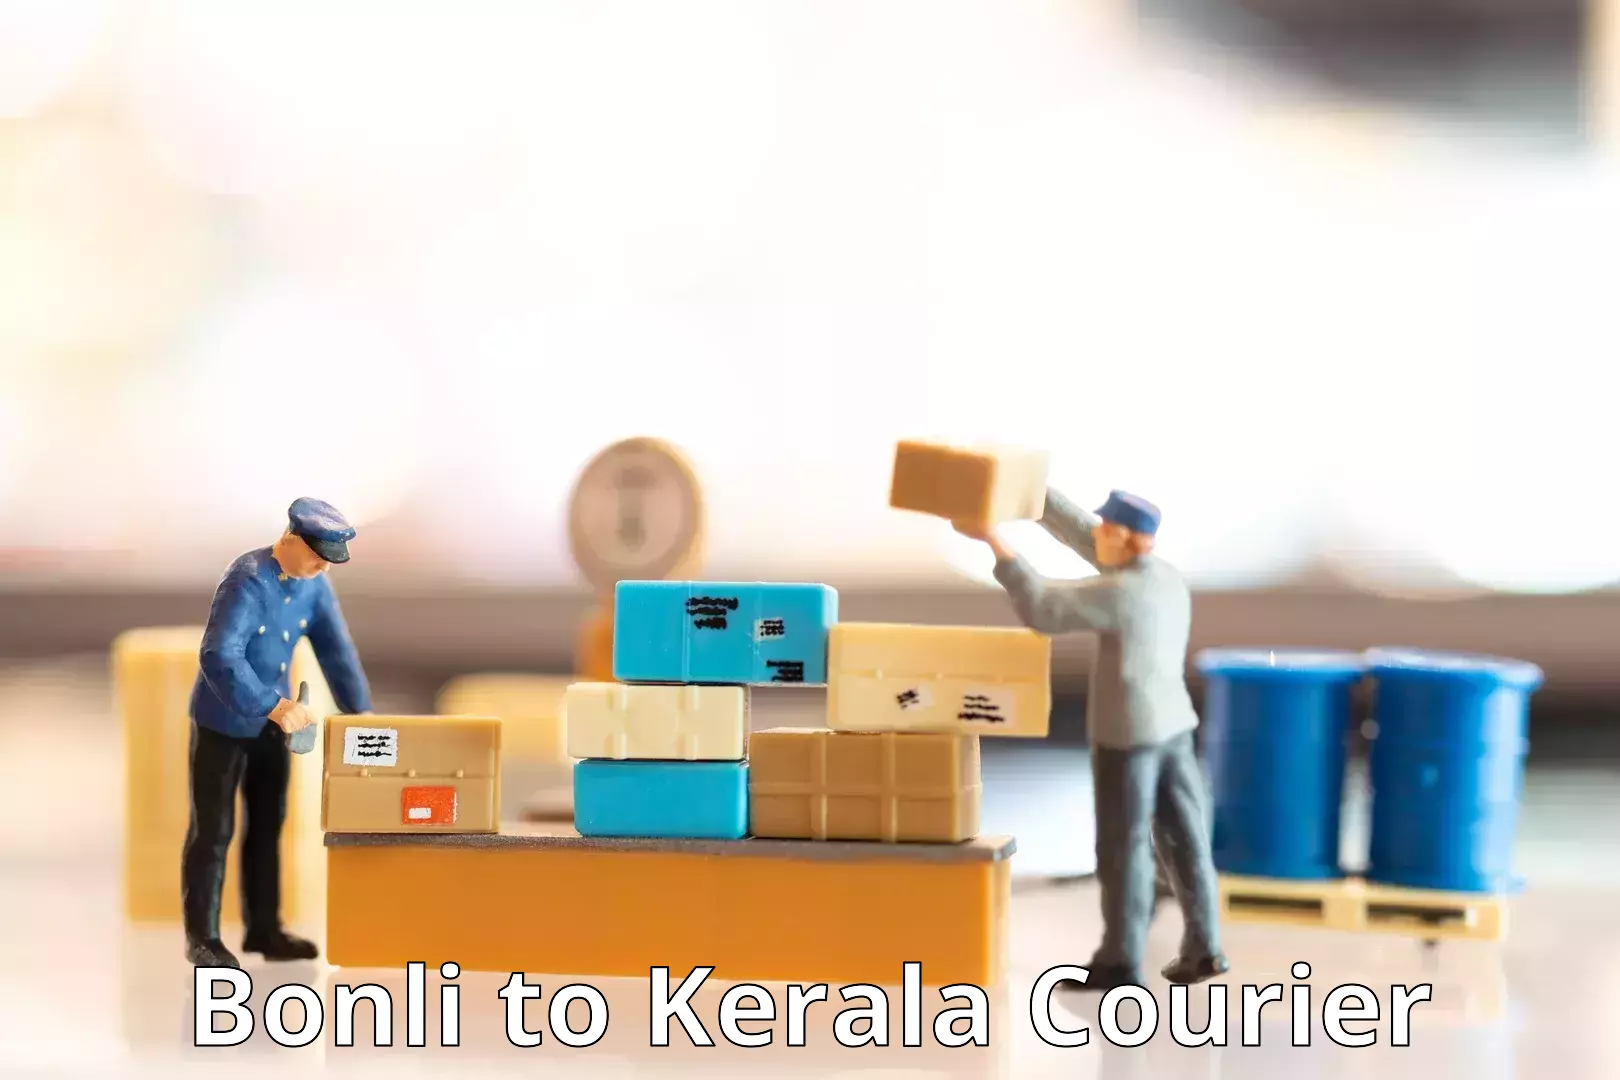 Professional courier handling Bonli to Kerala